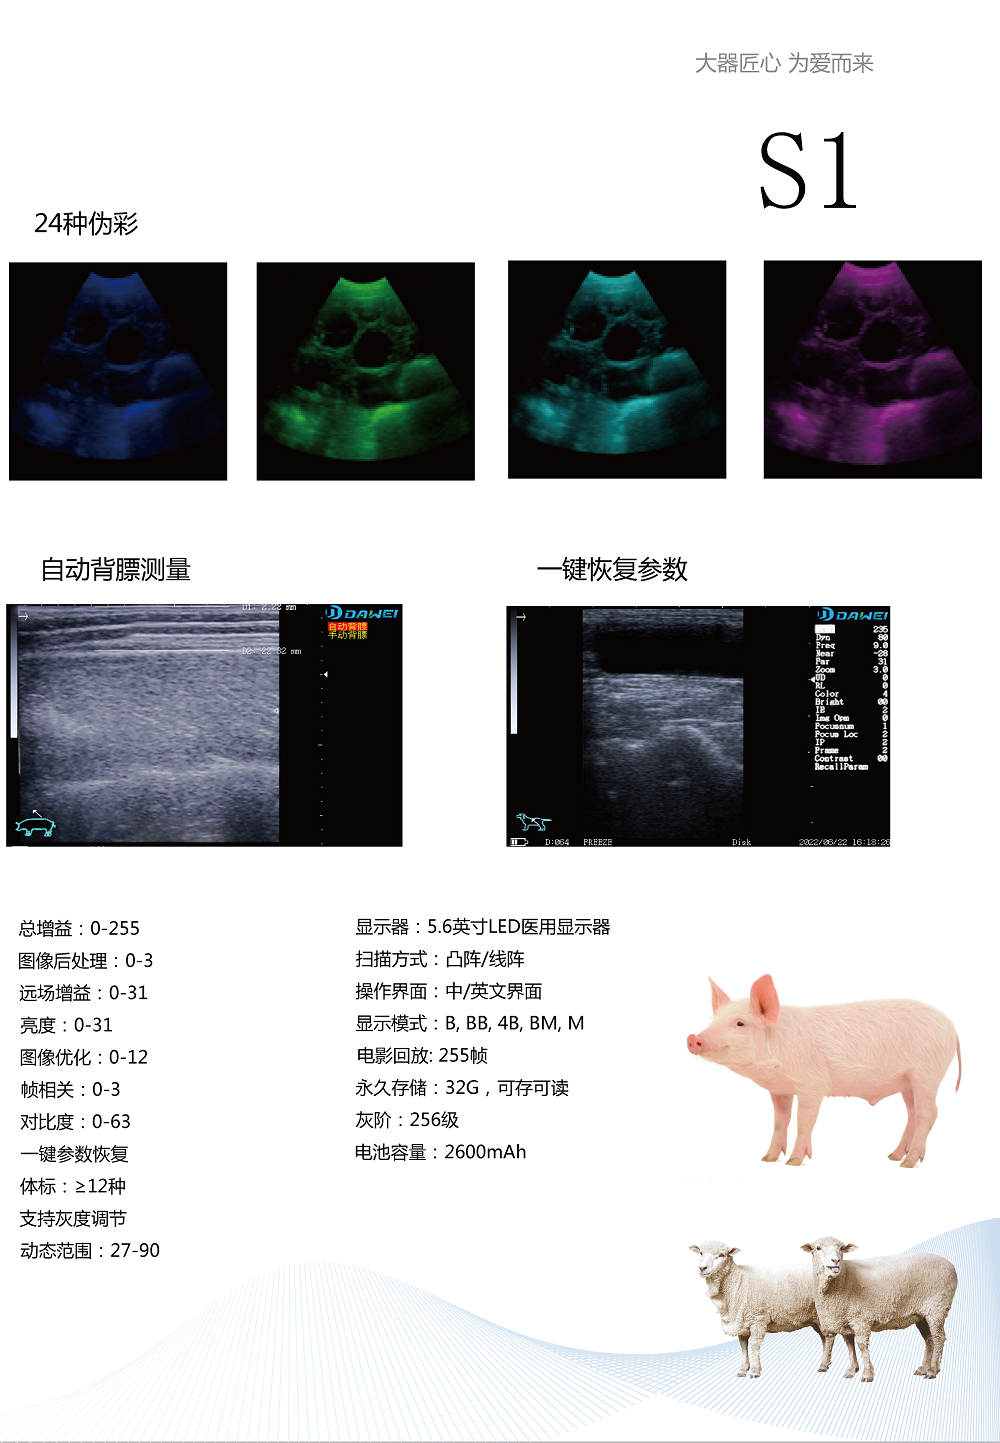 Cattle ultrasound machine, sheep ultrasound machine, sales of pig pregnancy testing equipment, donkey and horse ultrasound machine, manufacturer